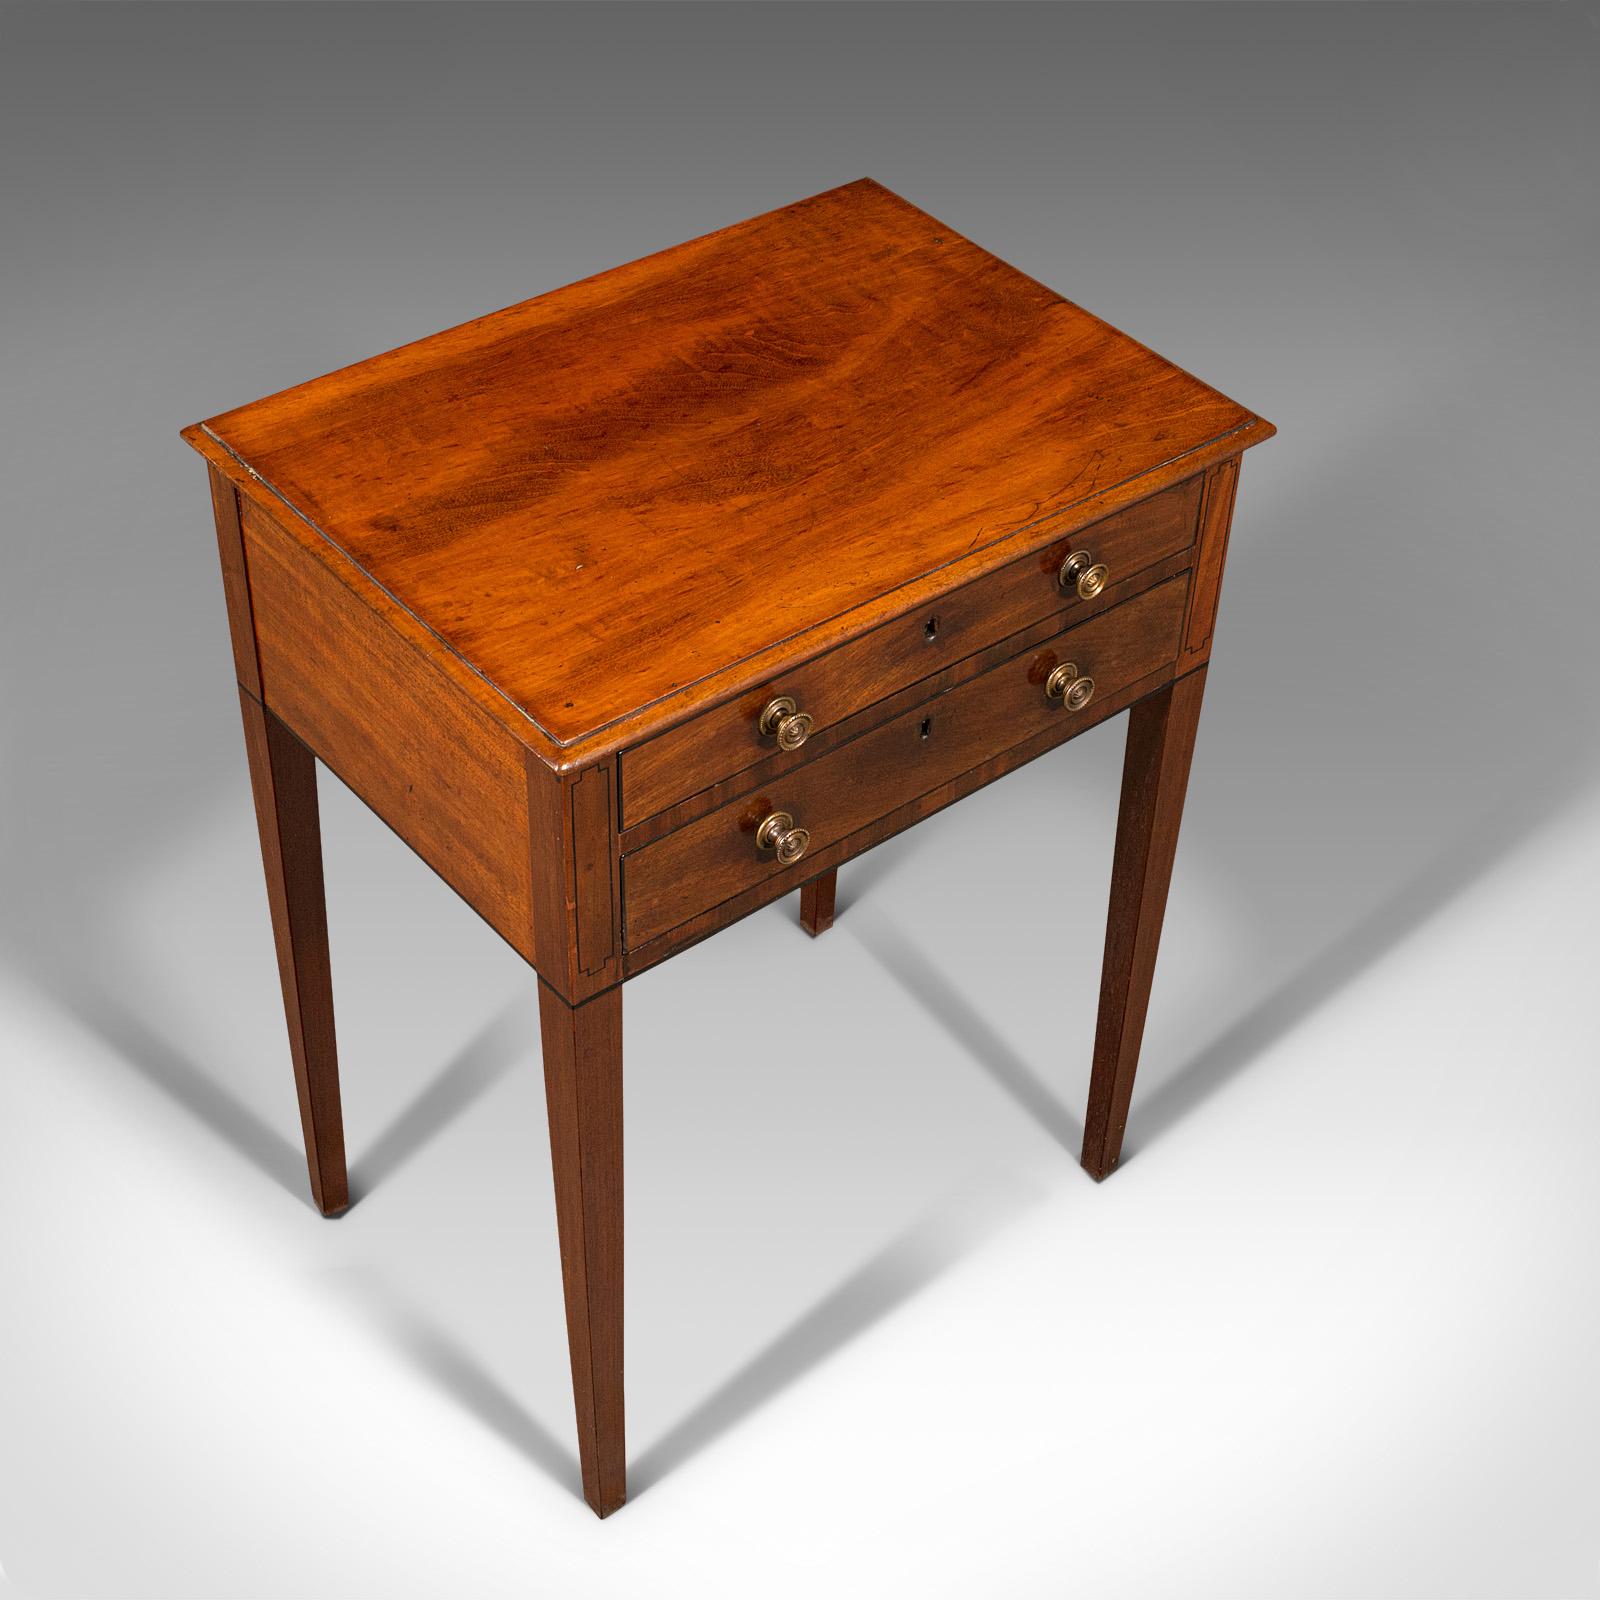 Wood Small Antique Sewing Table, English, Bureau, Correspondence Desk, Georgian, 1800